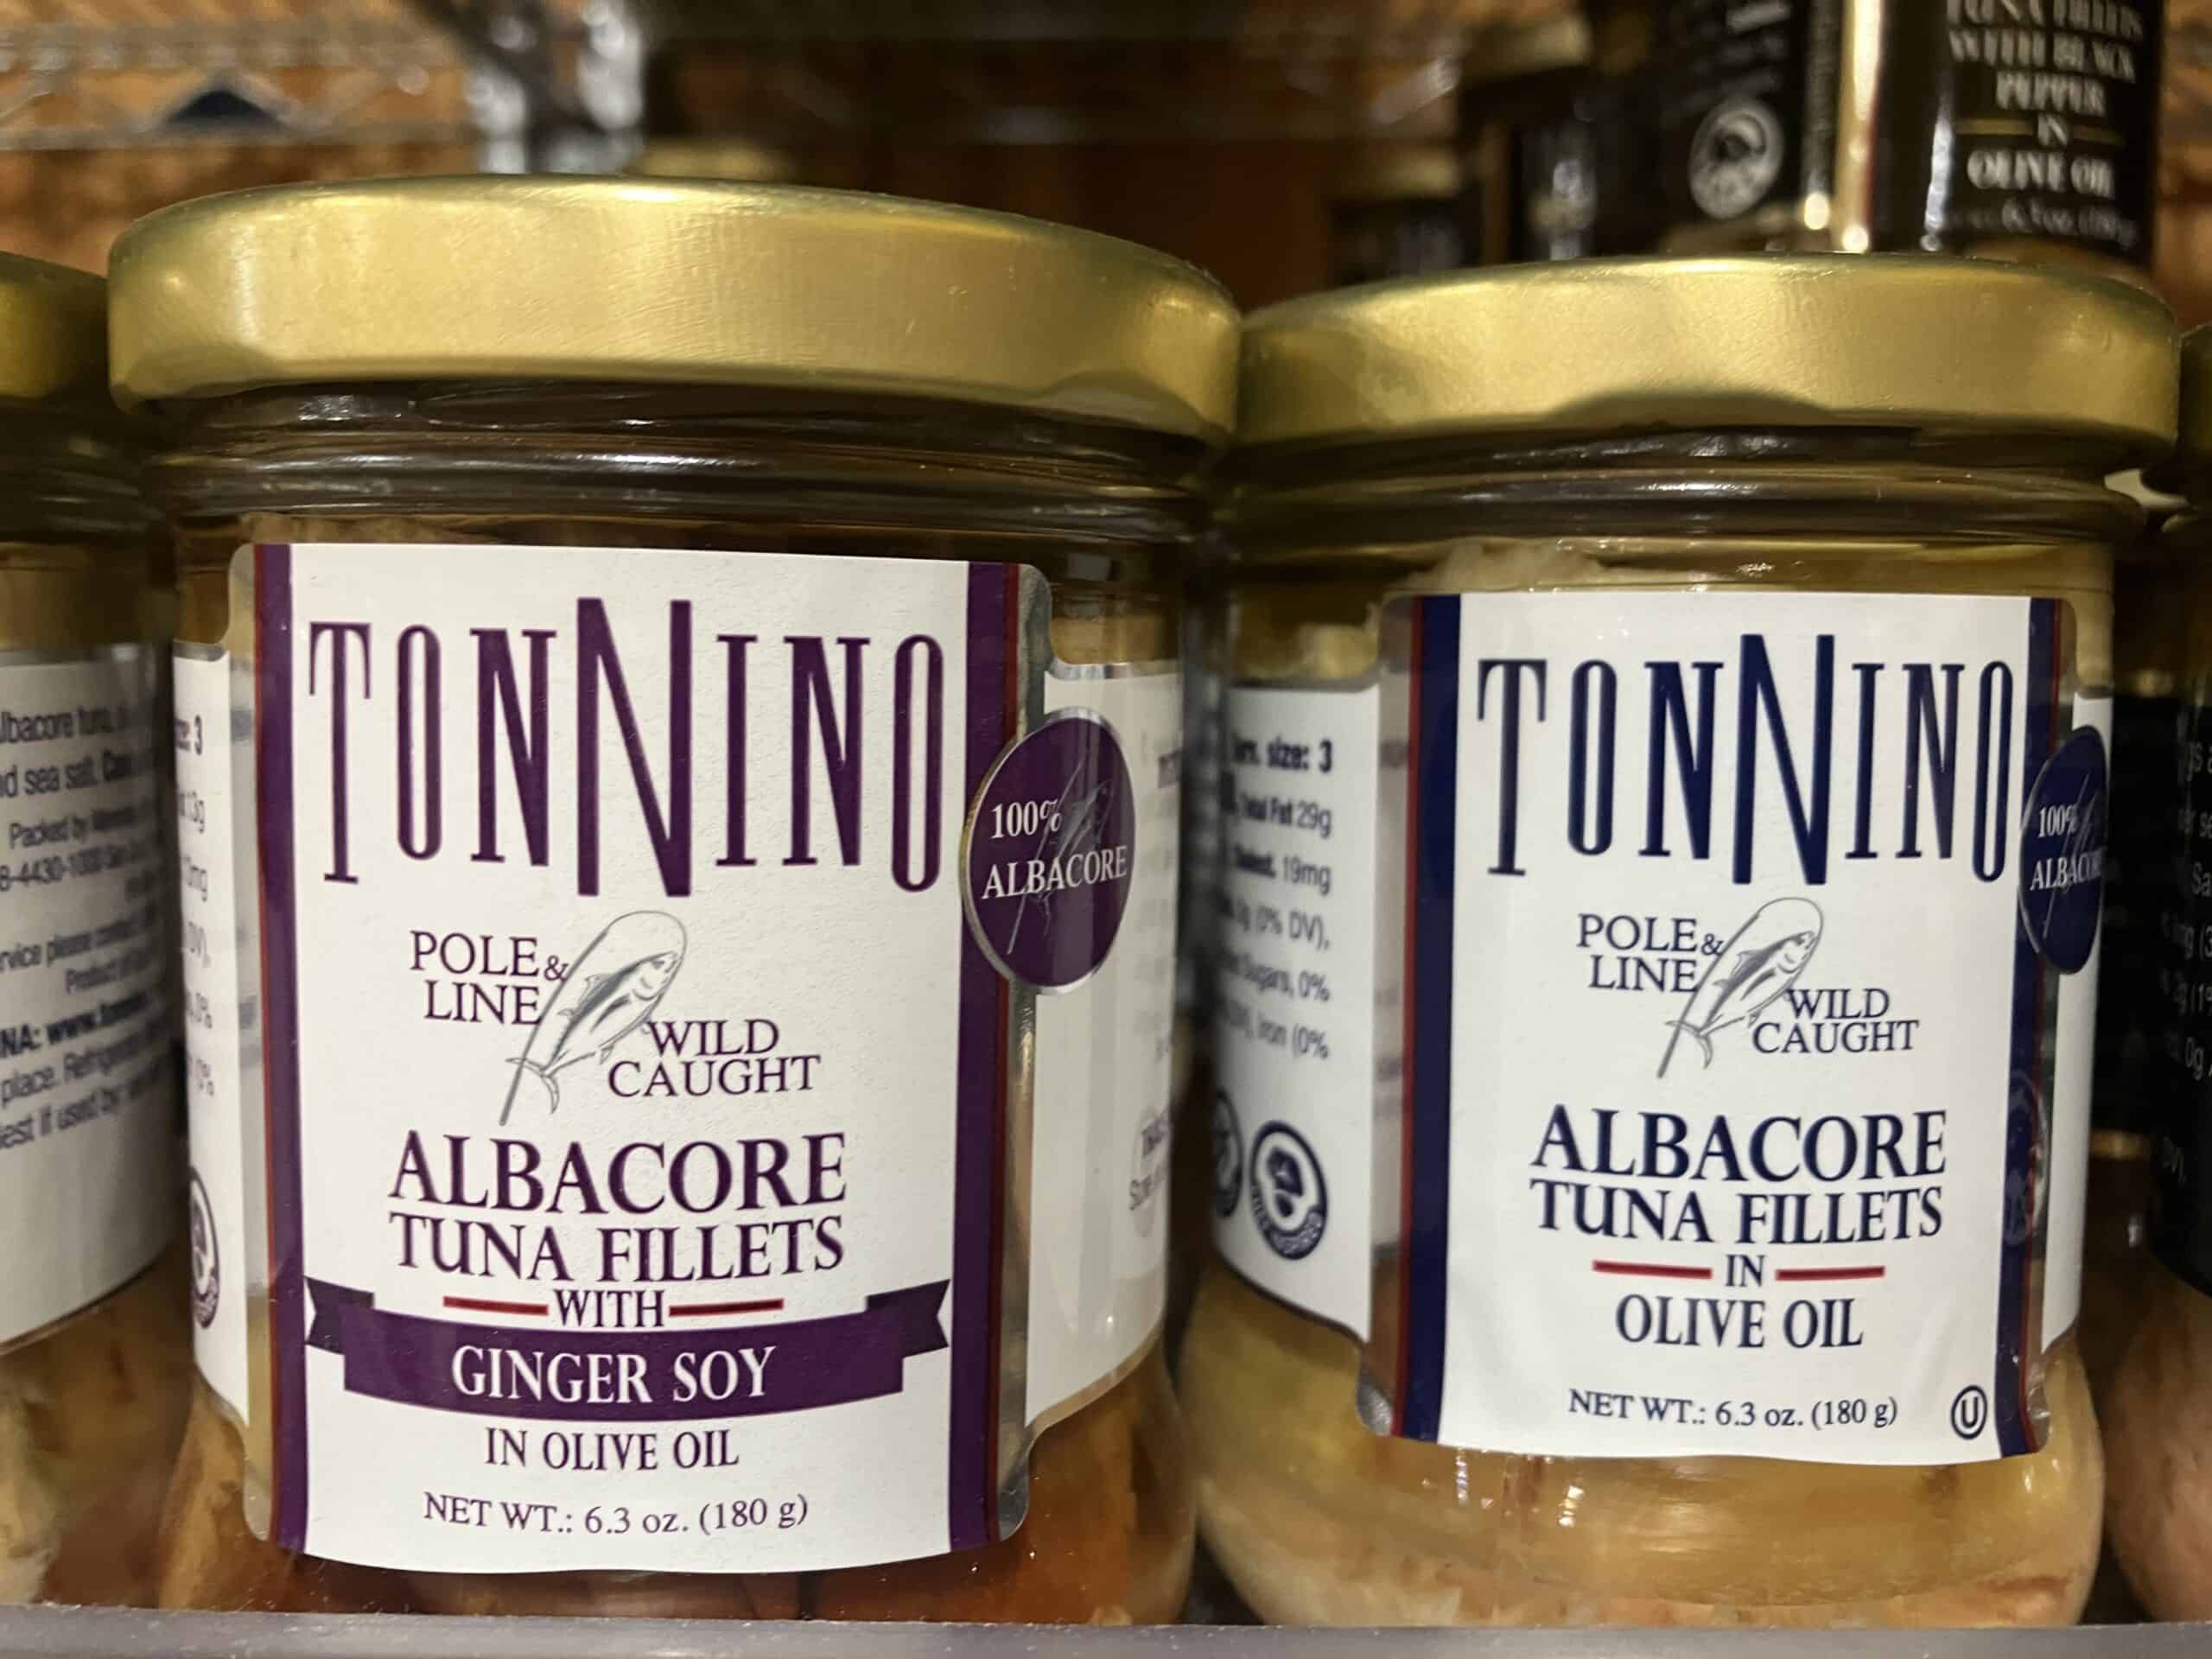 Tonnino tuna in glass jars